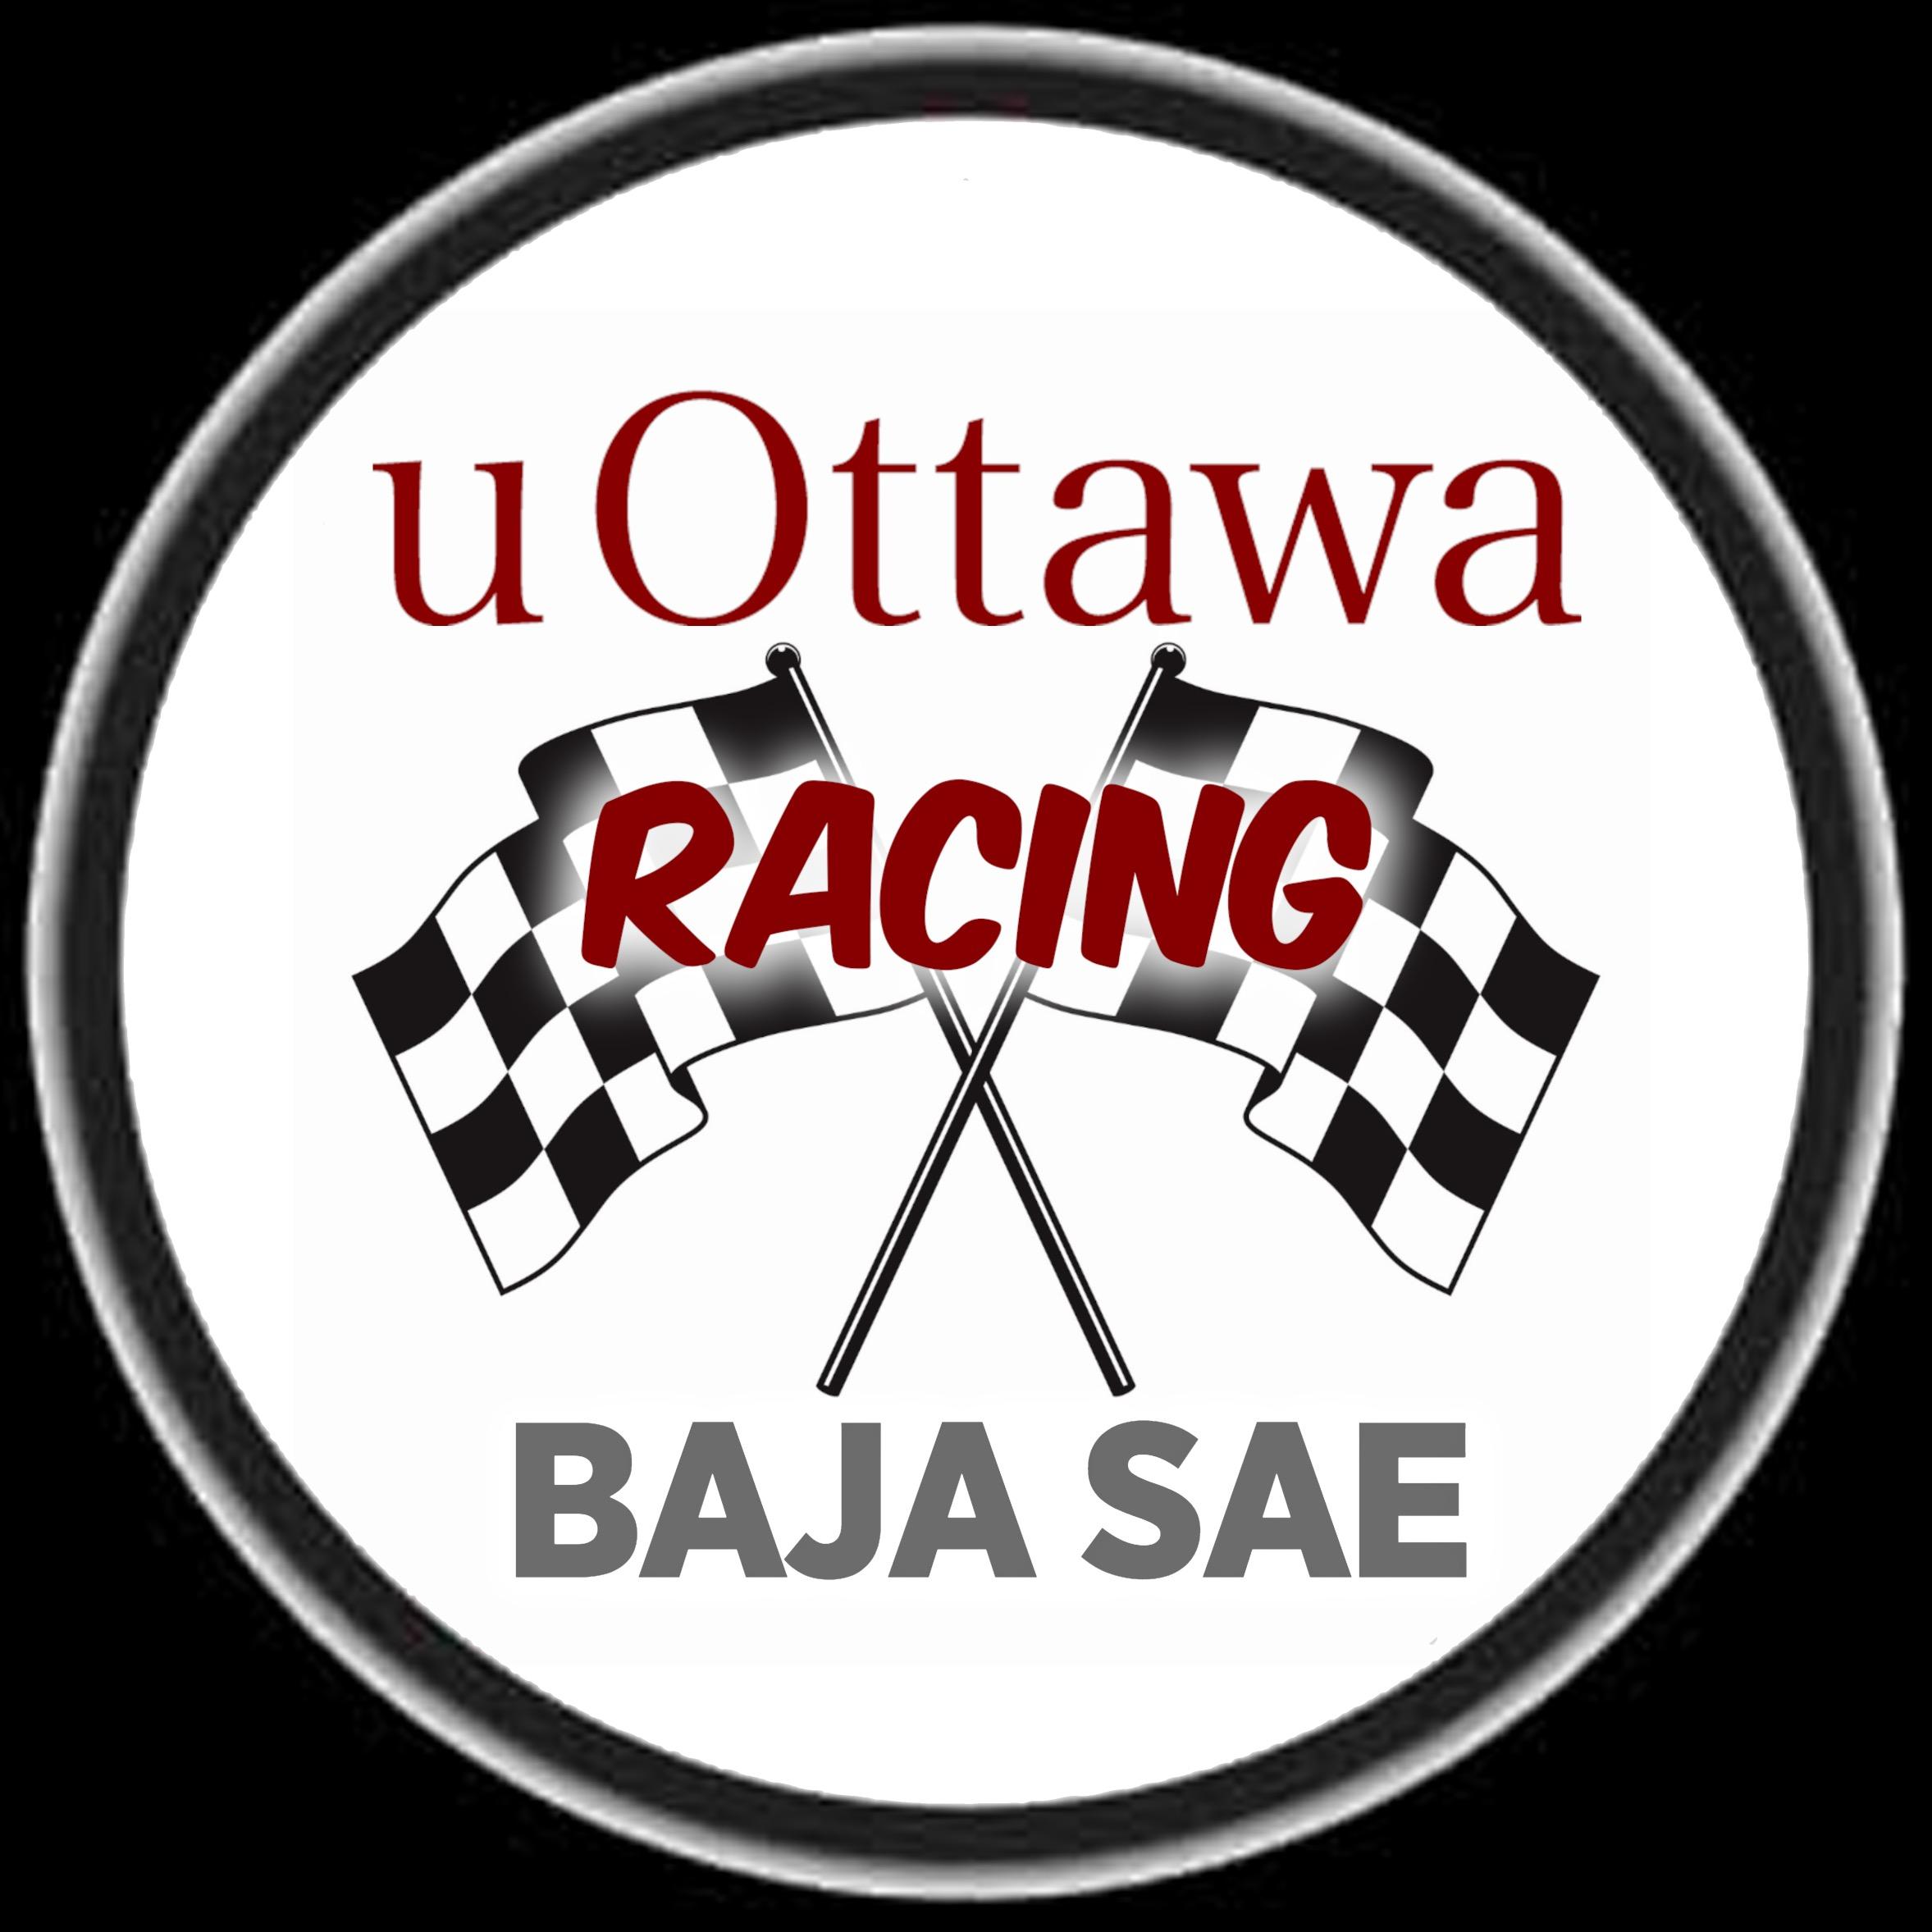 #UOttawa Canadian Students designing, building, marketing + racing an off-road vehicle #BajaSAE
May 25-28, 2017
Pittsburg State University
 Pittsburg,Kansas